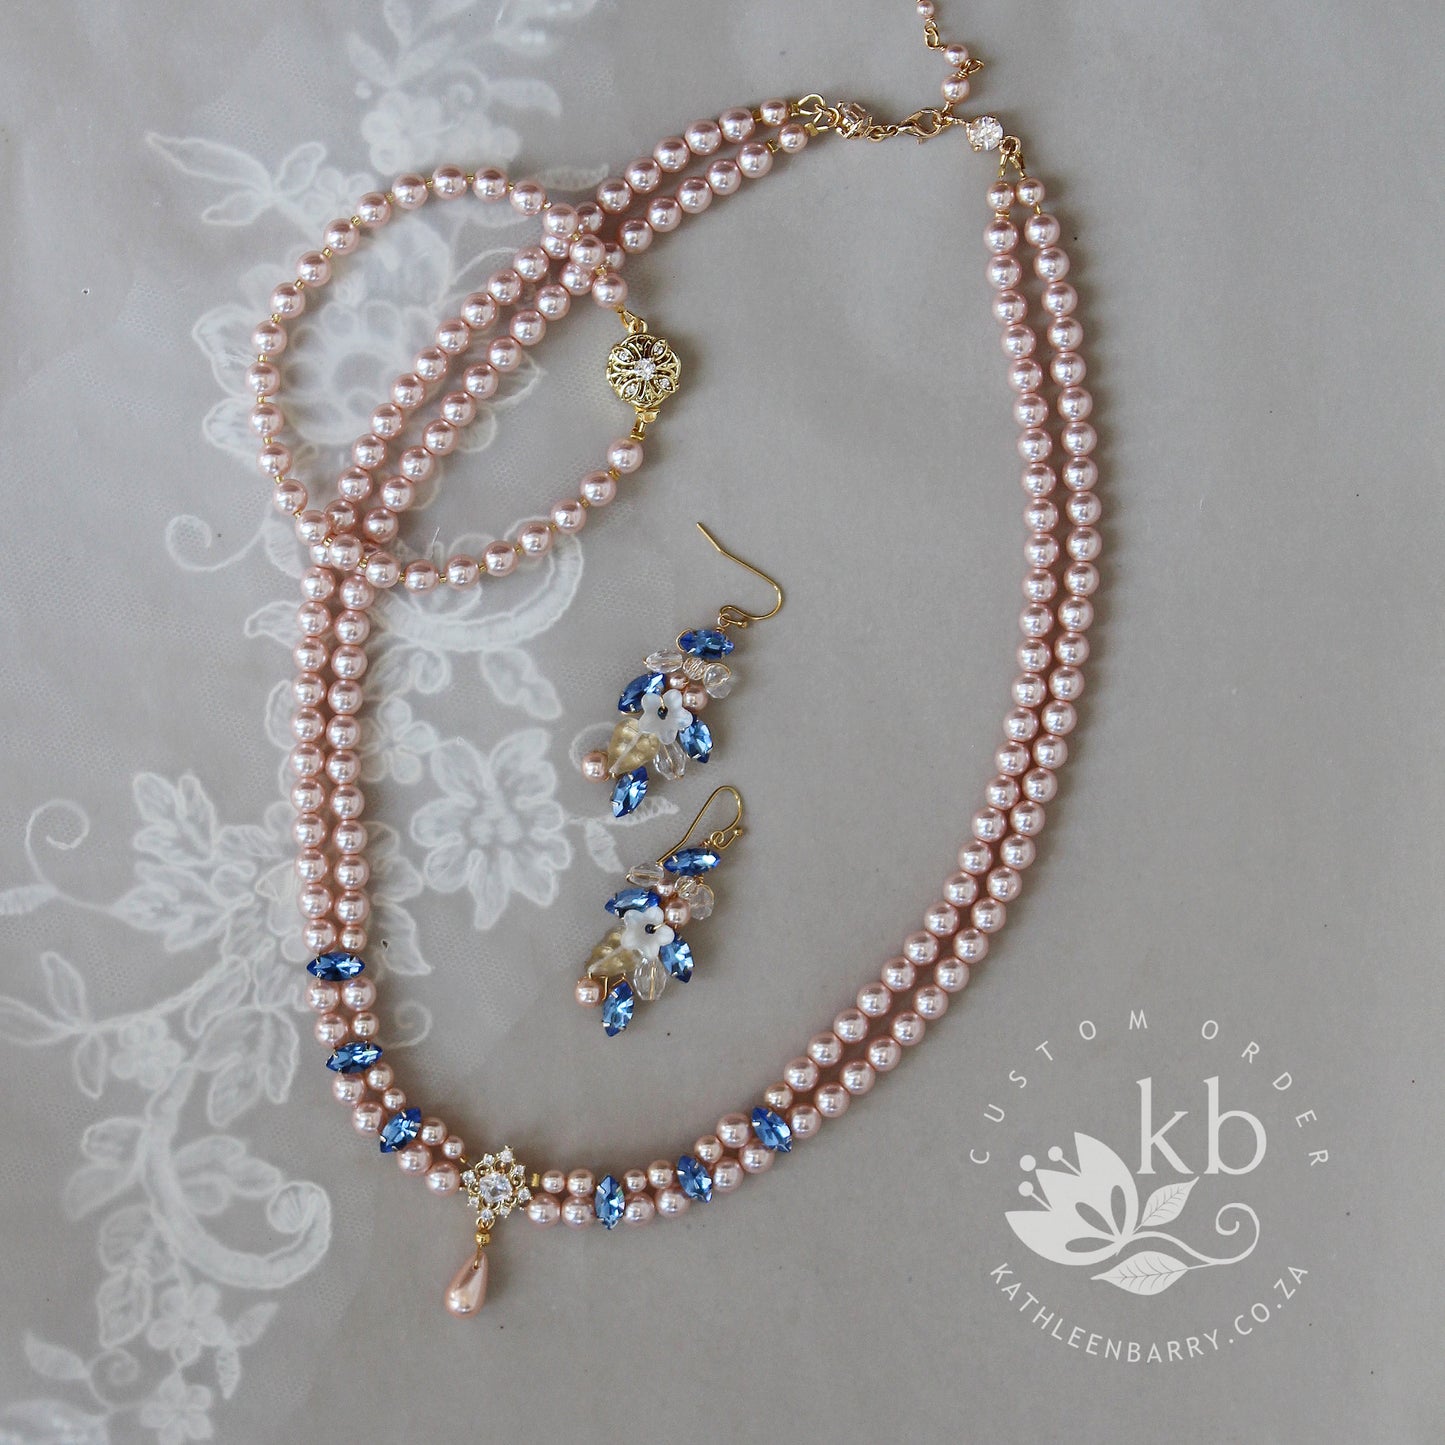 Noa Rhinestone floral earrings - custom colors available - Statement earrings